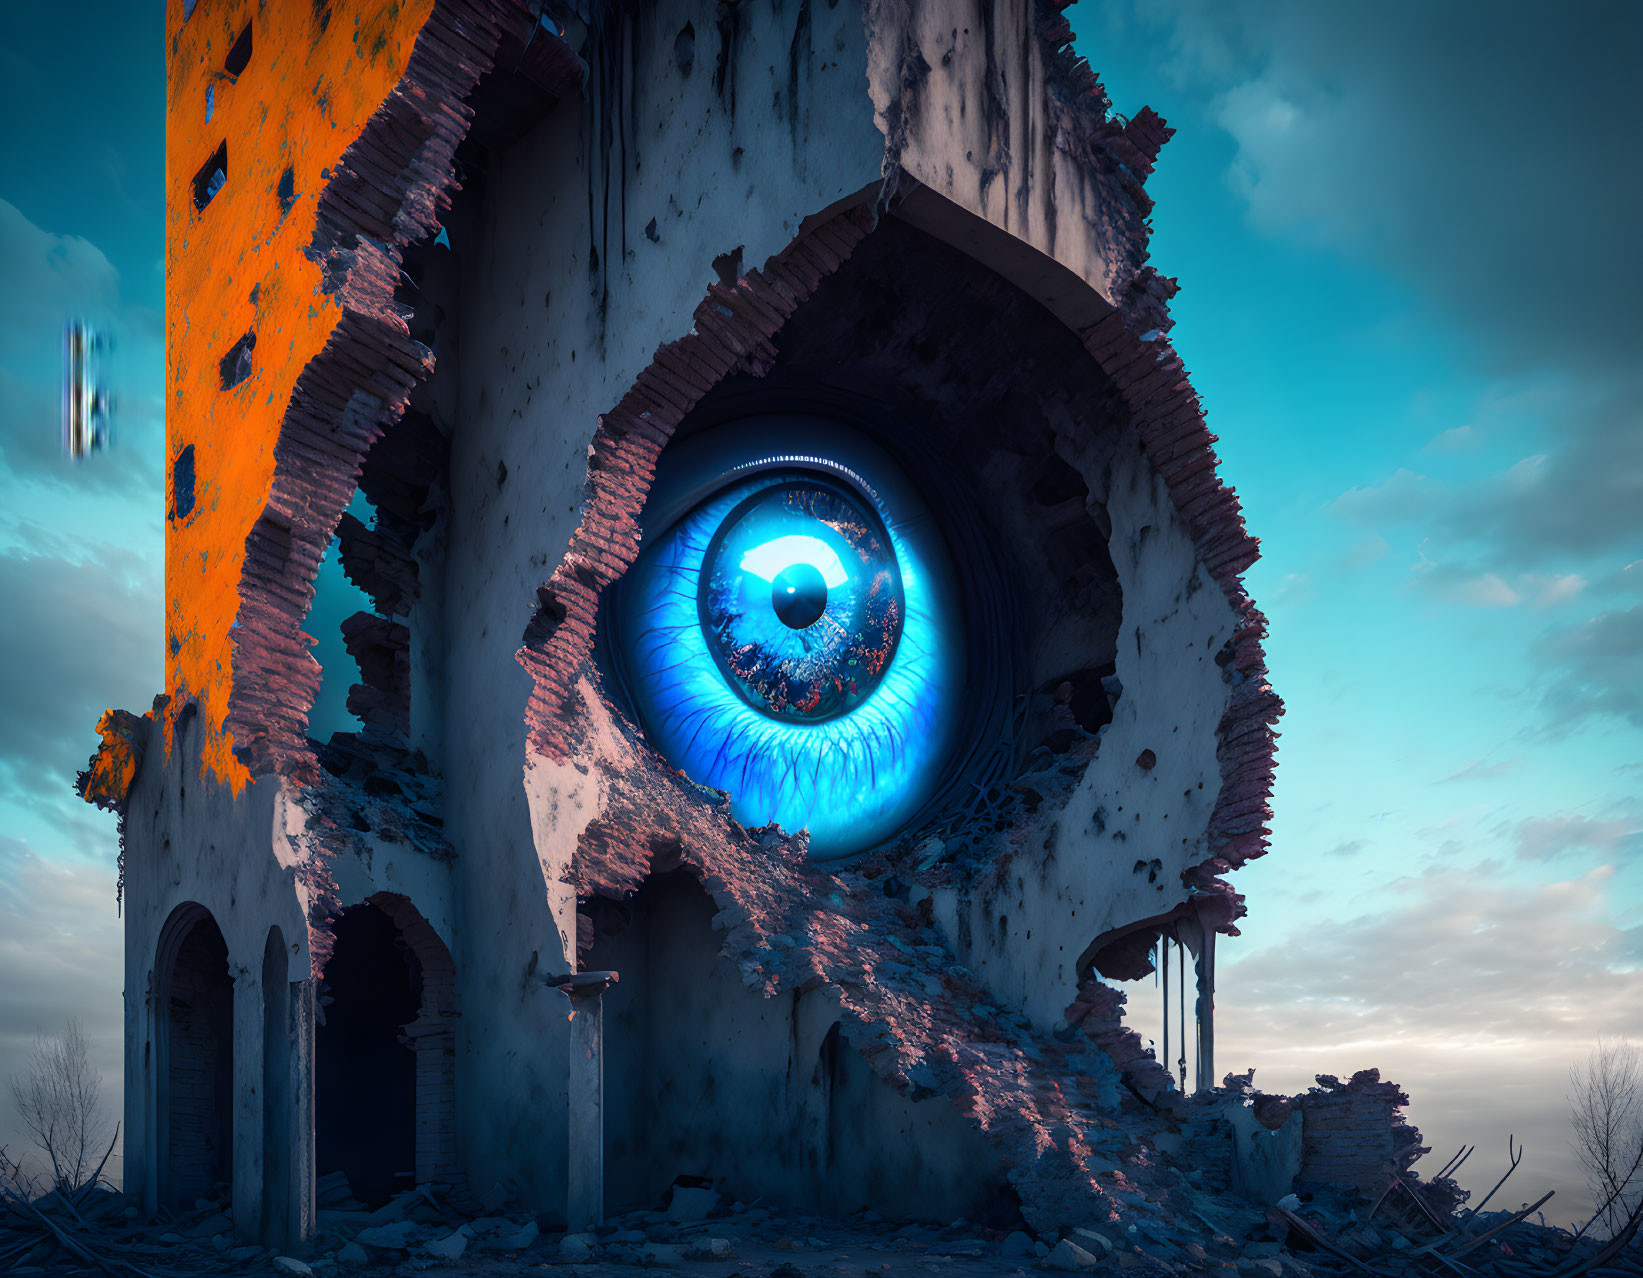  An eye in the ruins